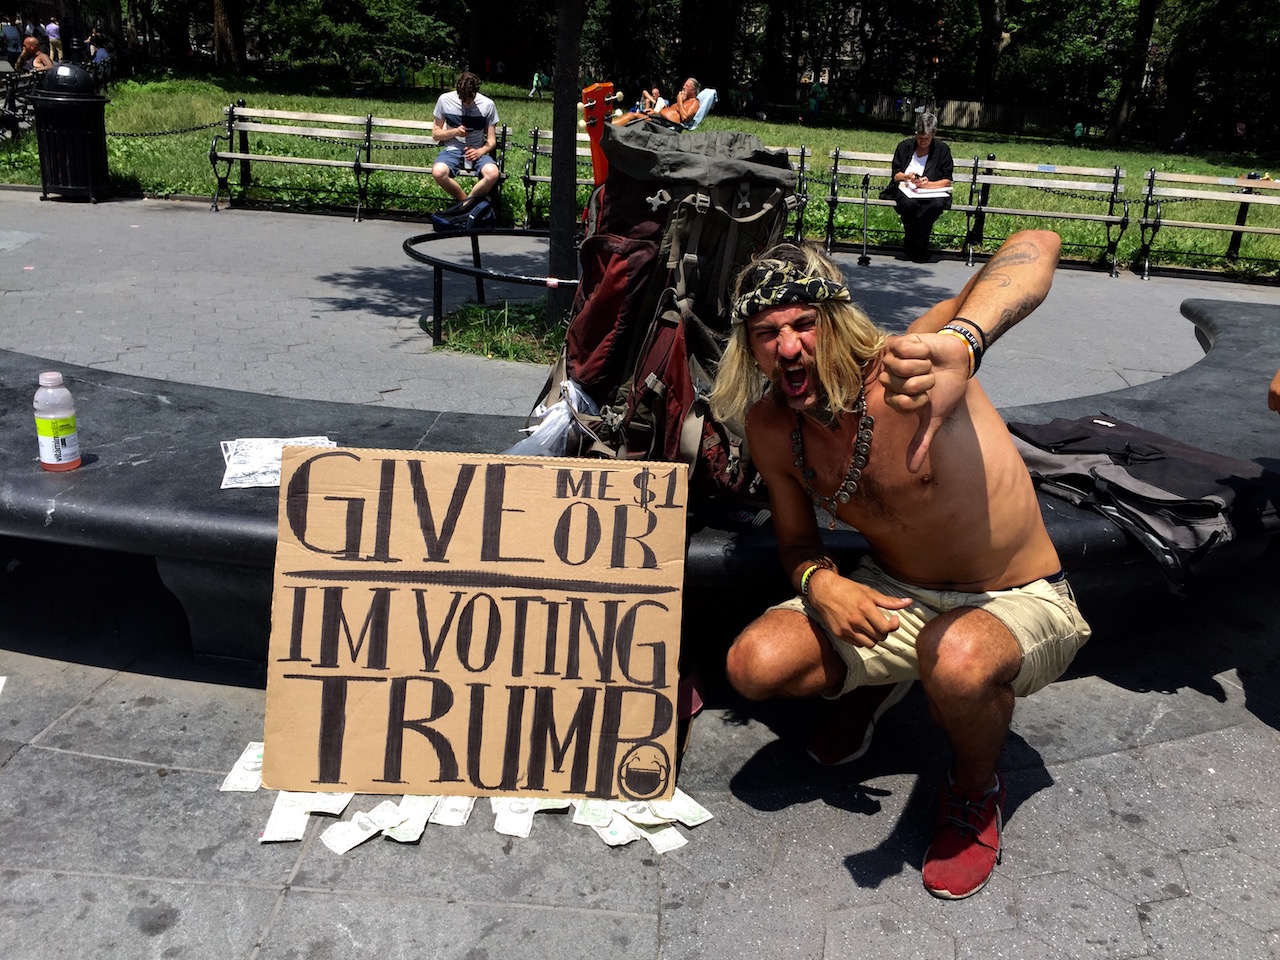 The Donald might appreciate this Washington Square Park panhandler’s entrepreneurial spirit. Photo by Tequila Minsky 